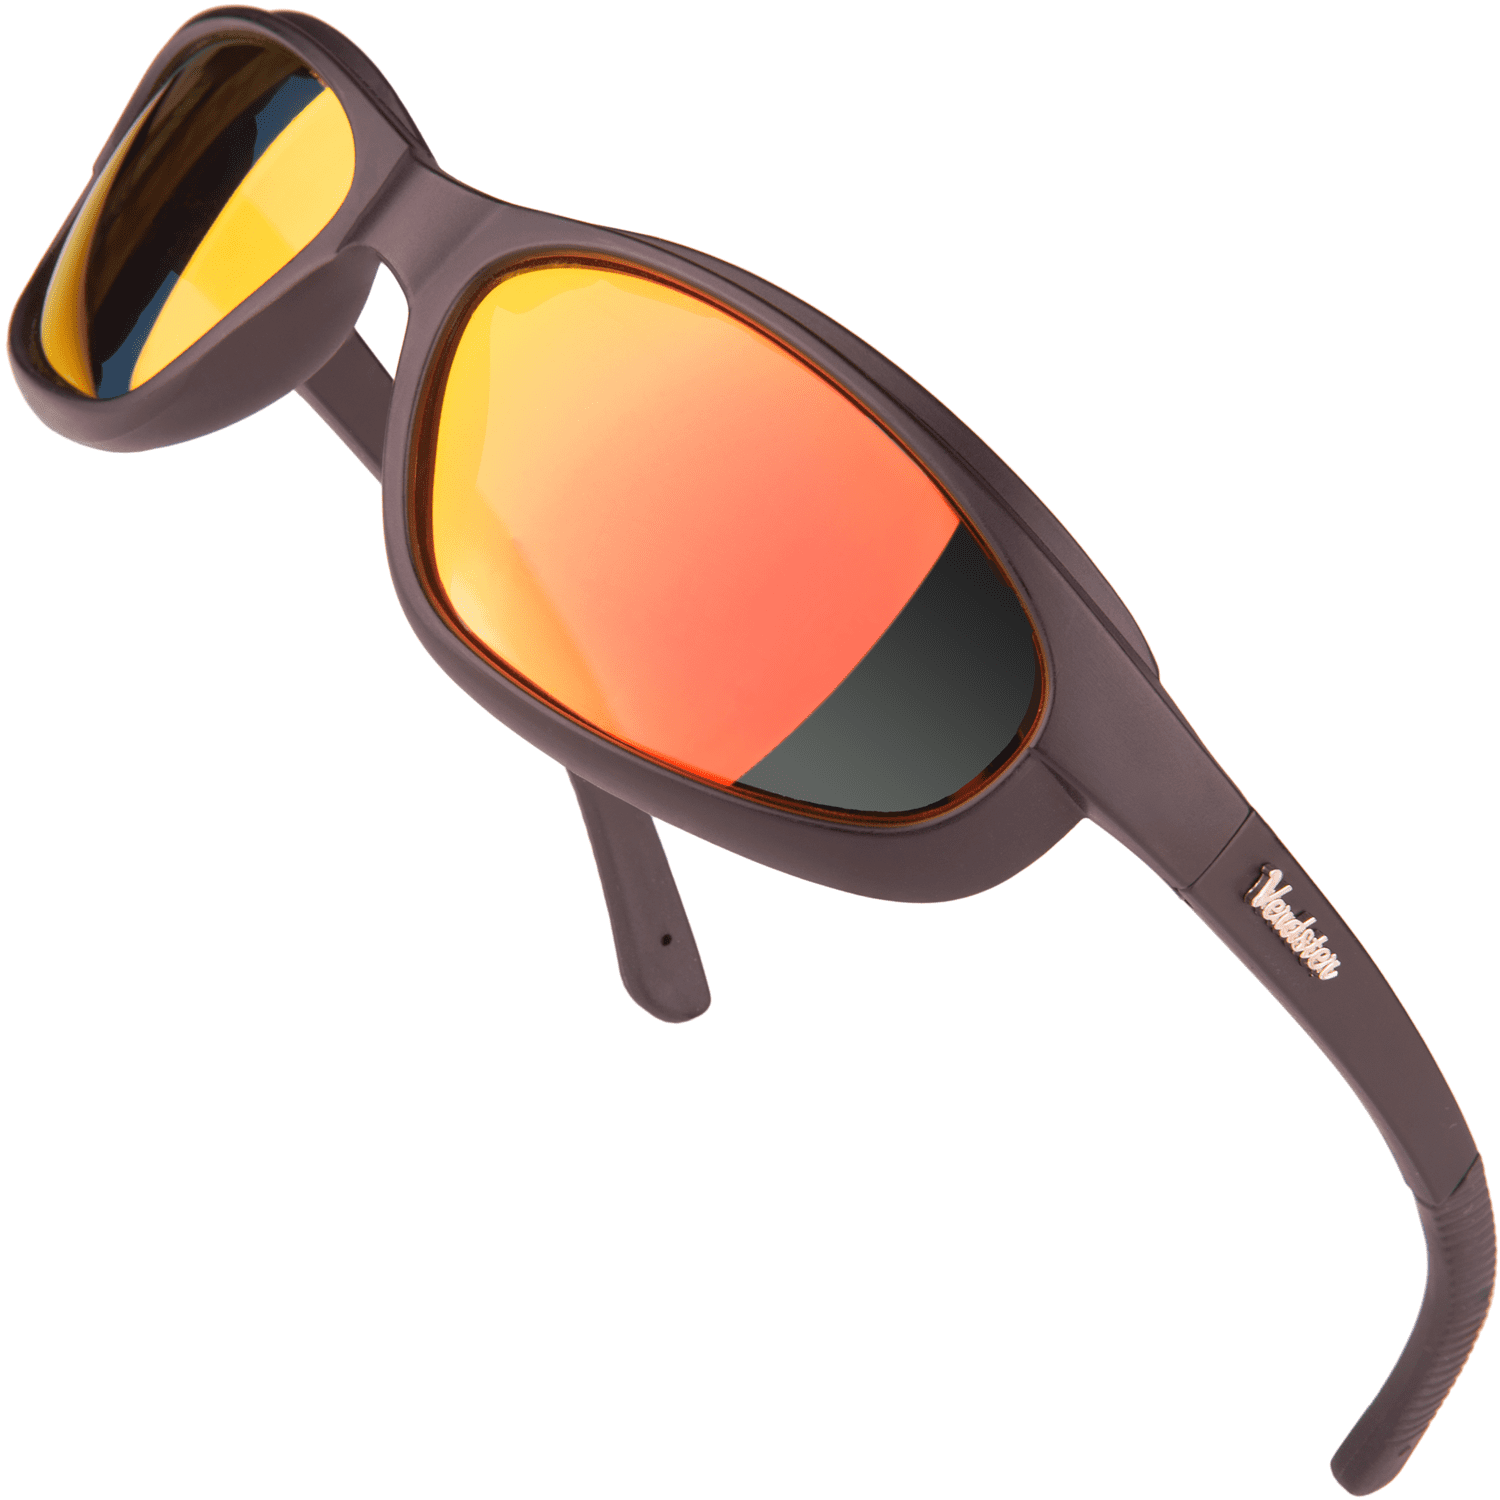 Men /& Women Verdster Airdam Classic Polarized Sunglasses For Motorcycle /& ATV